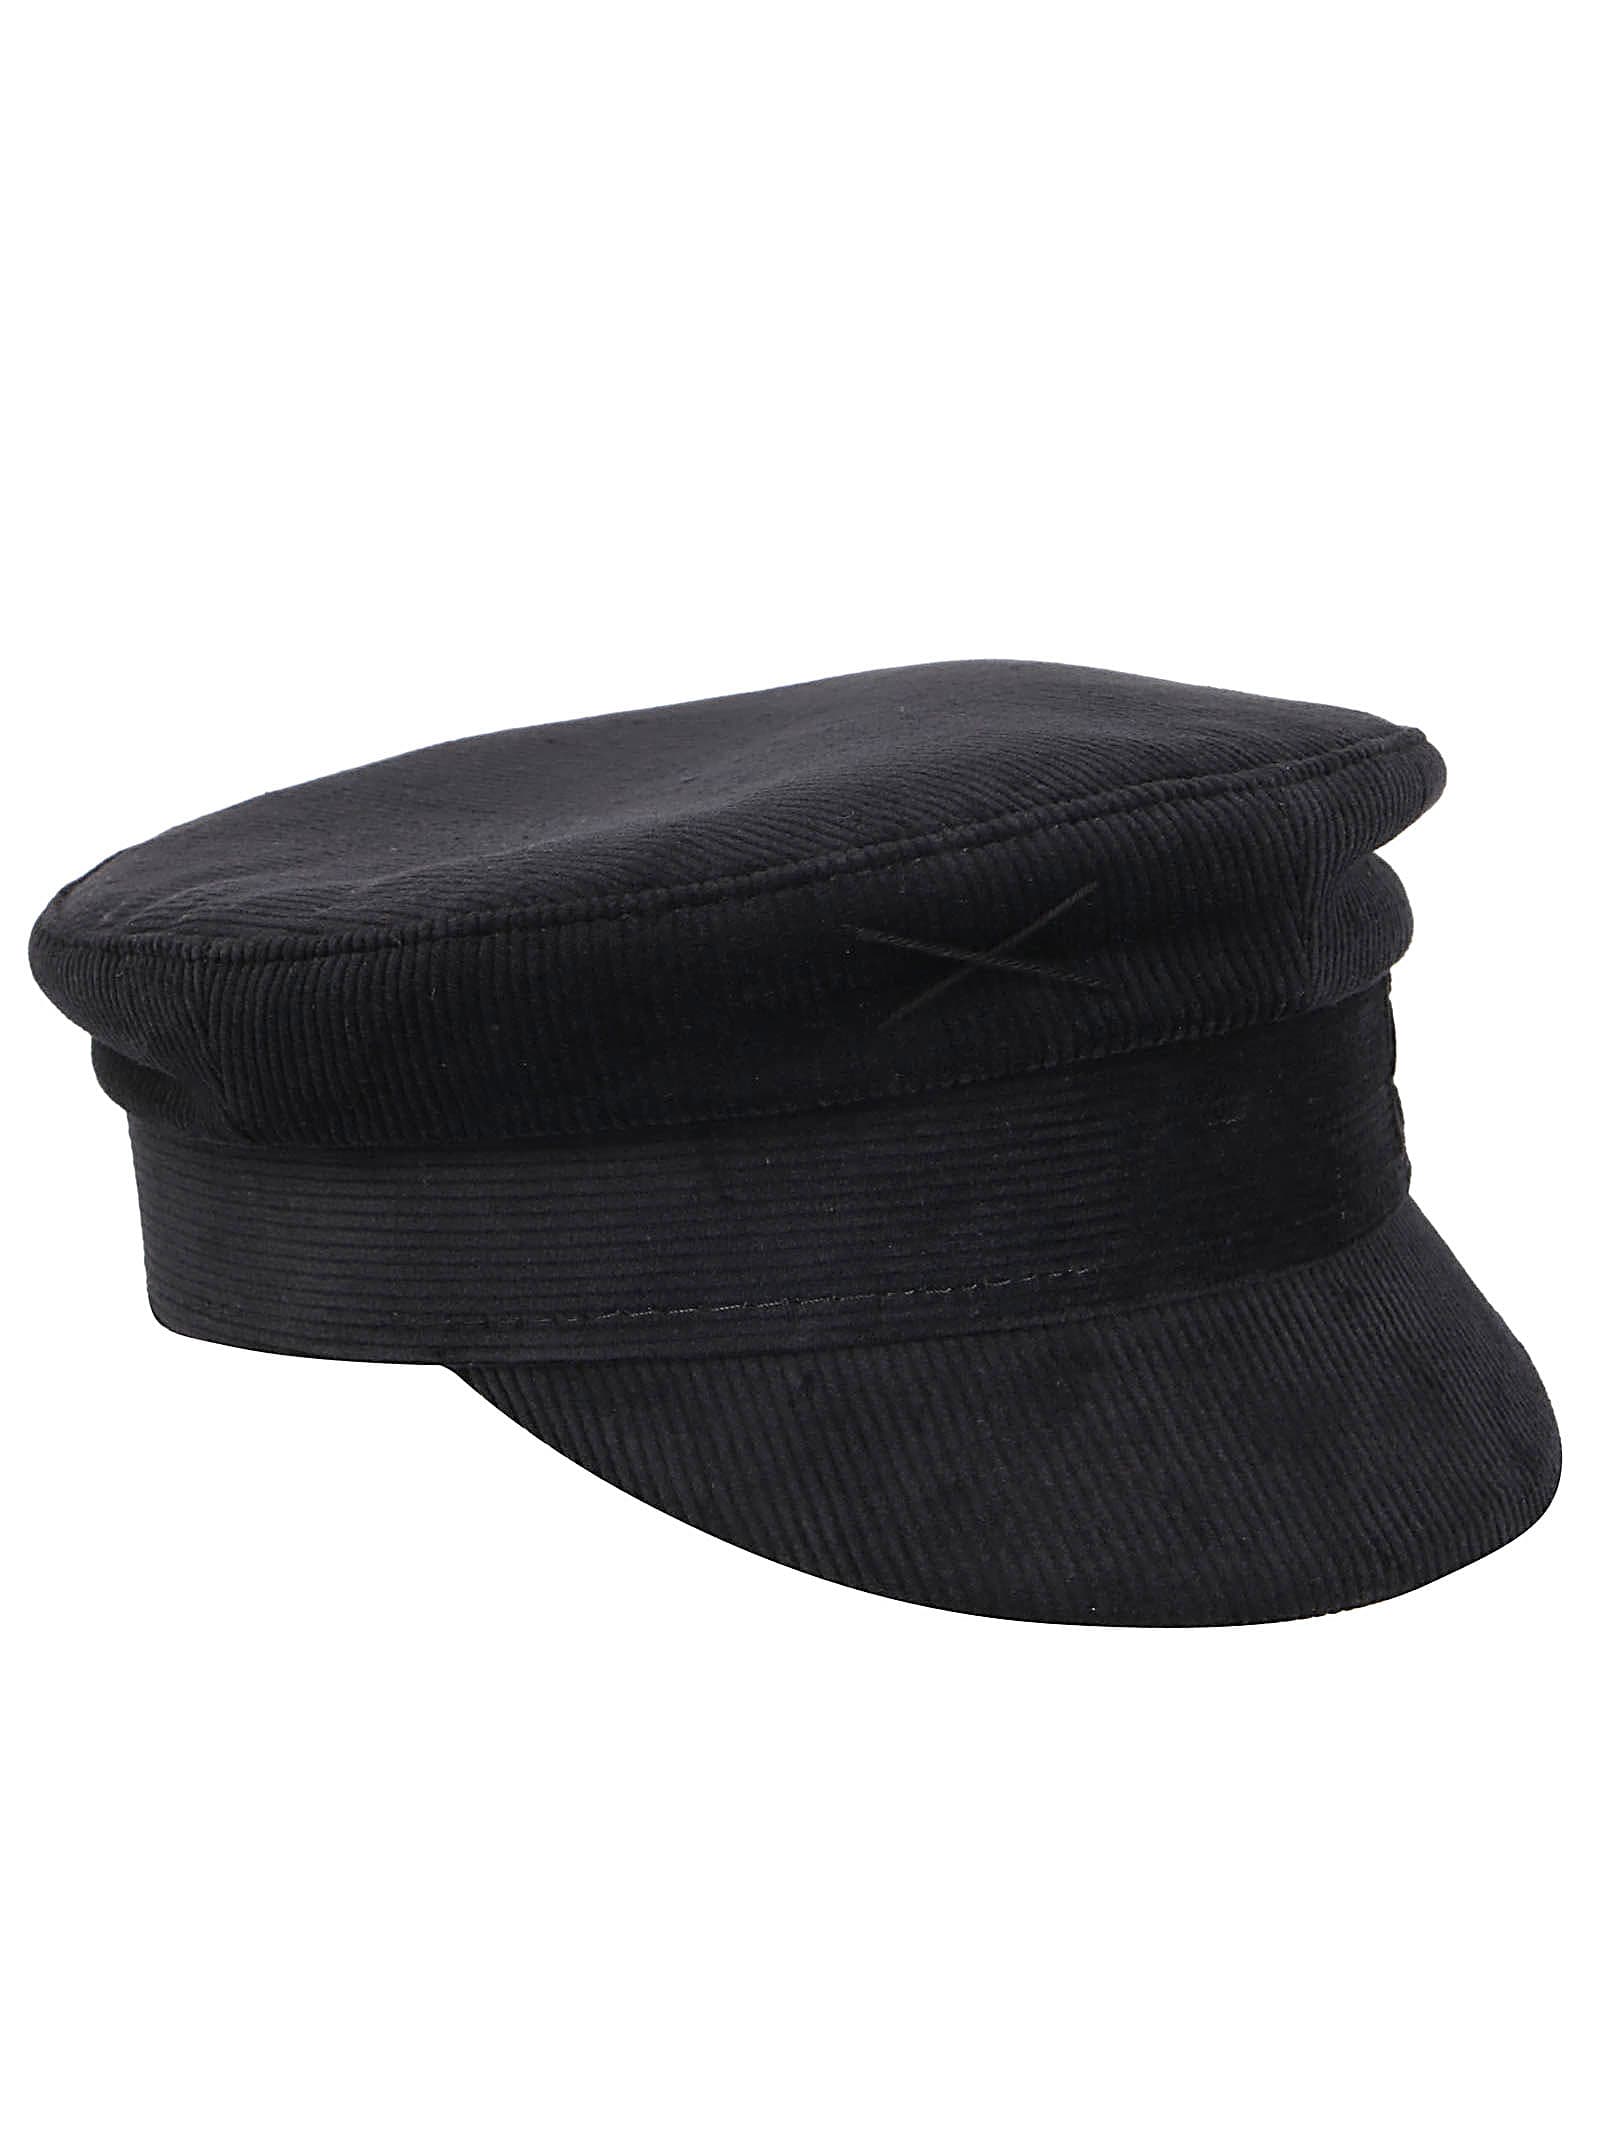 Ruslan Baginskiy Hats | italist, ALWAYS LIKE A SALE